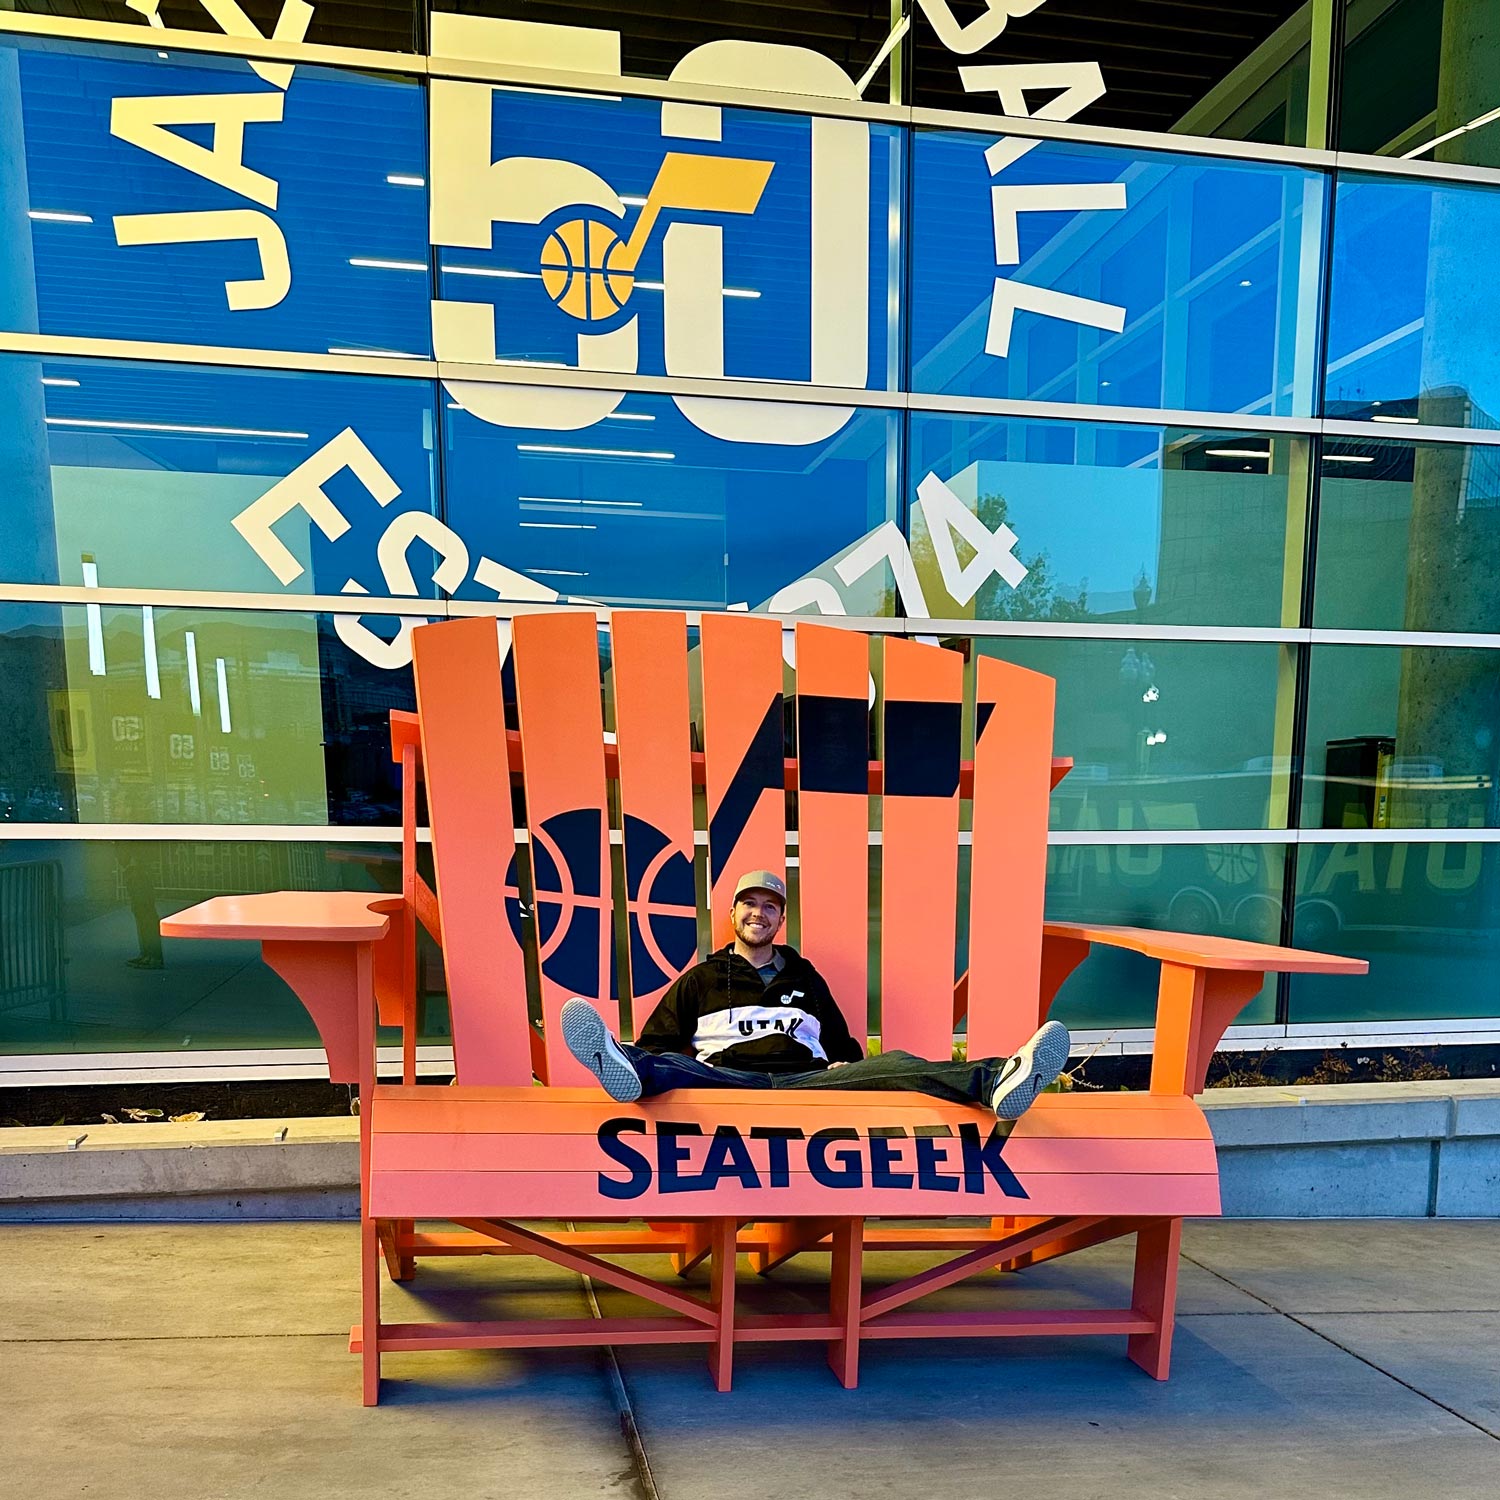 Utah Jazz / Seatgeek Giant Adirondack Chair for Delta Center events